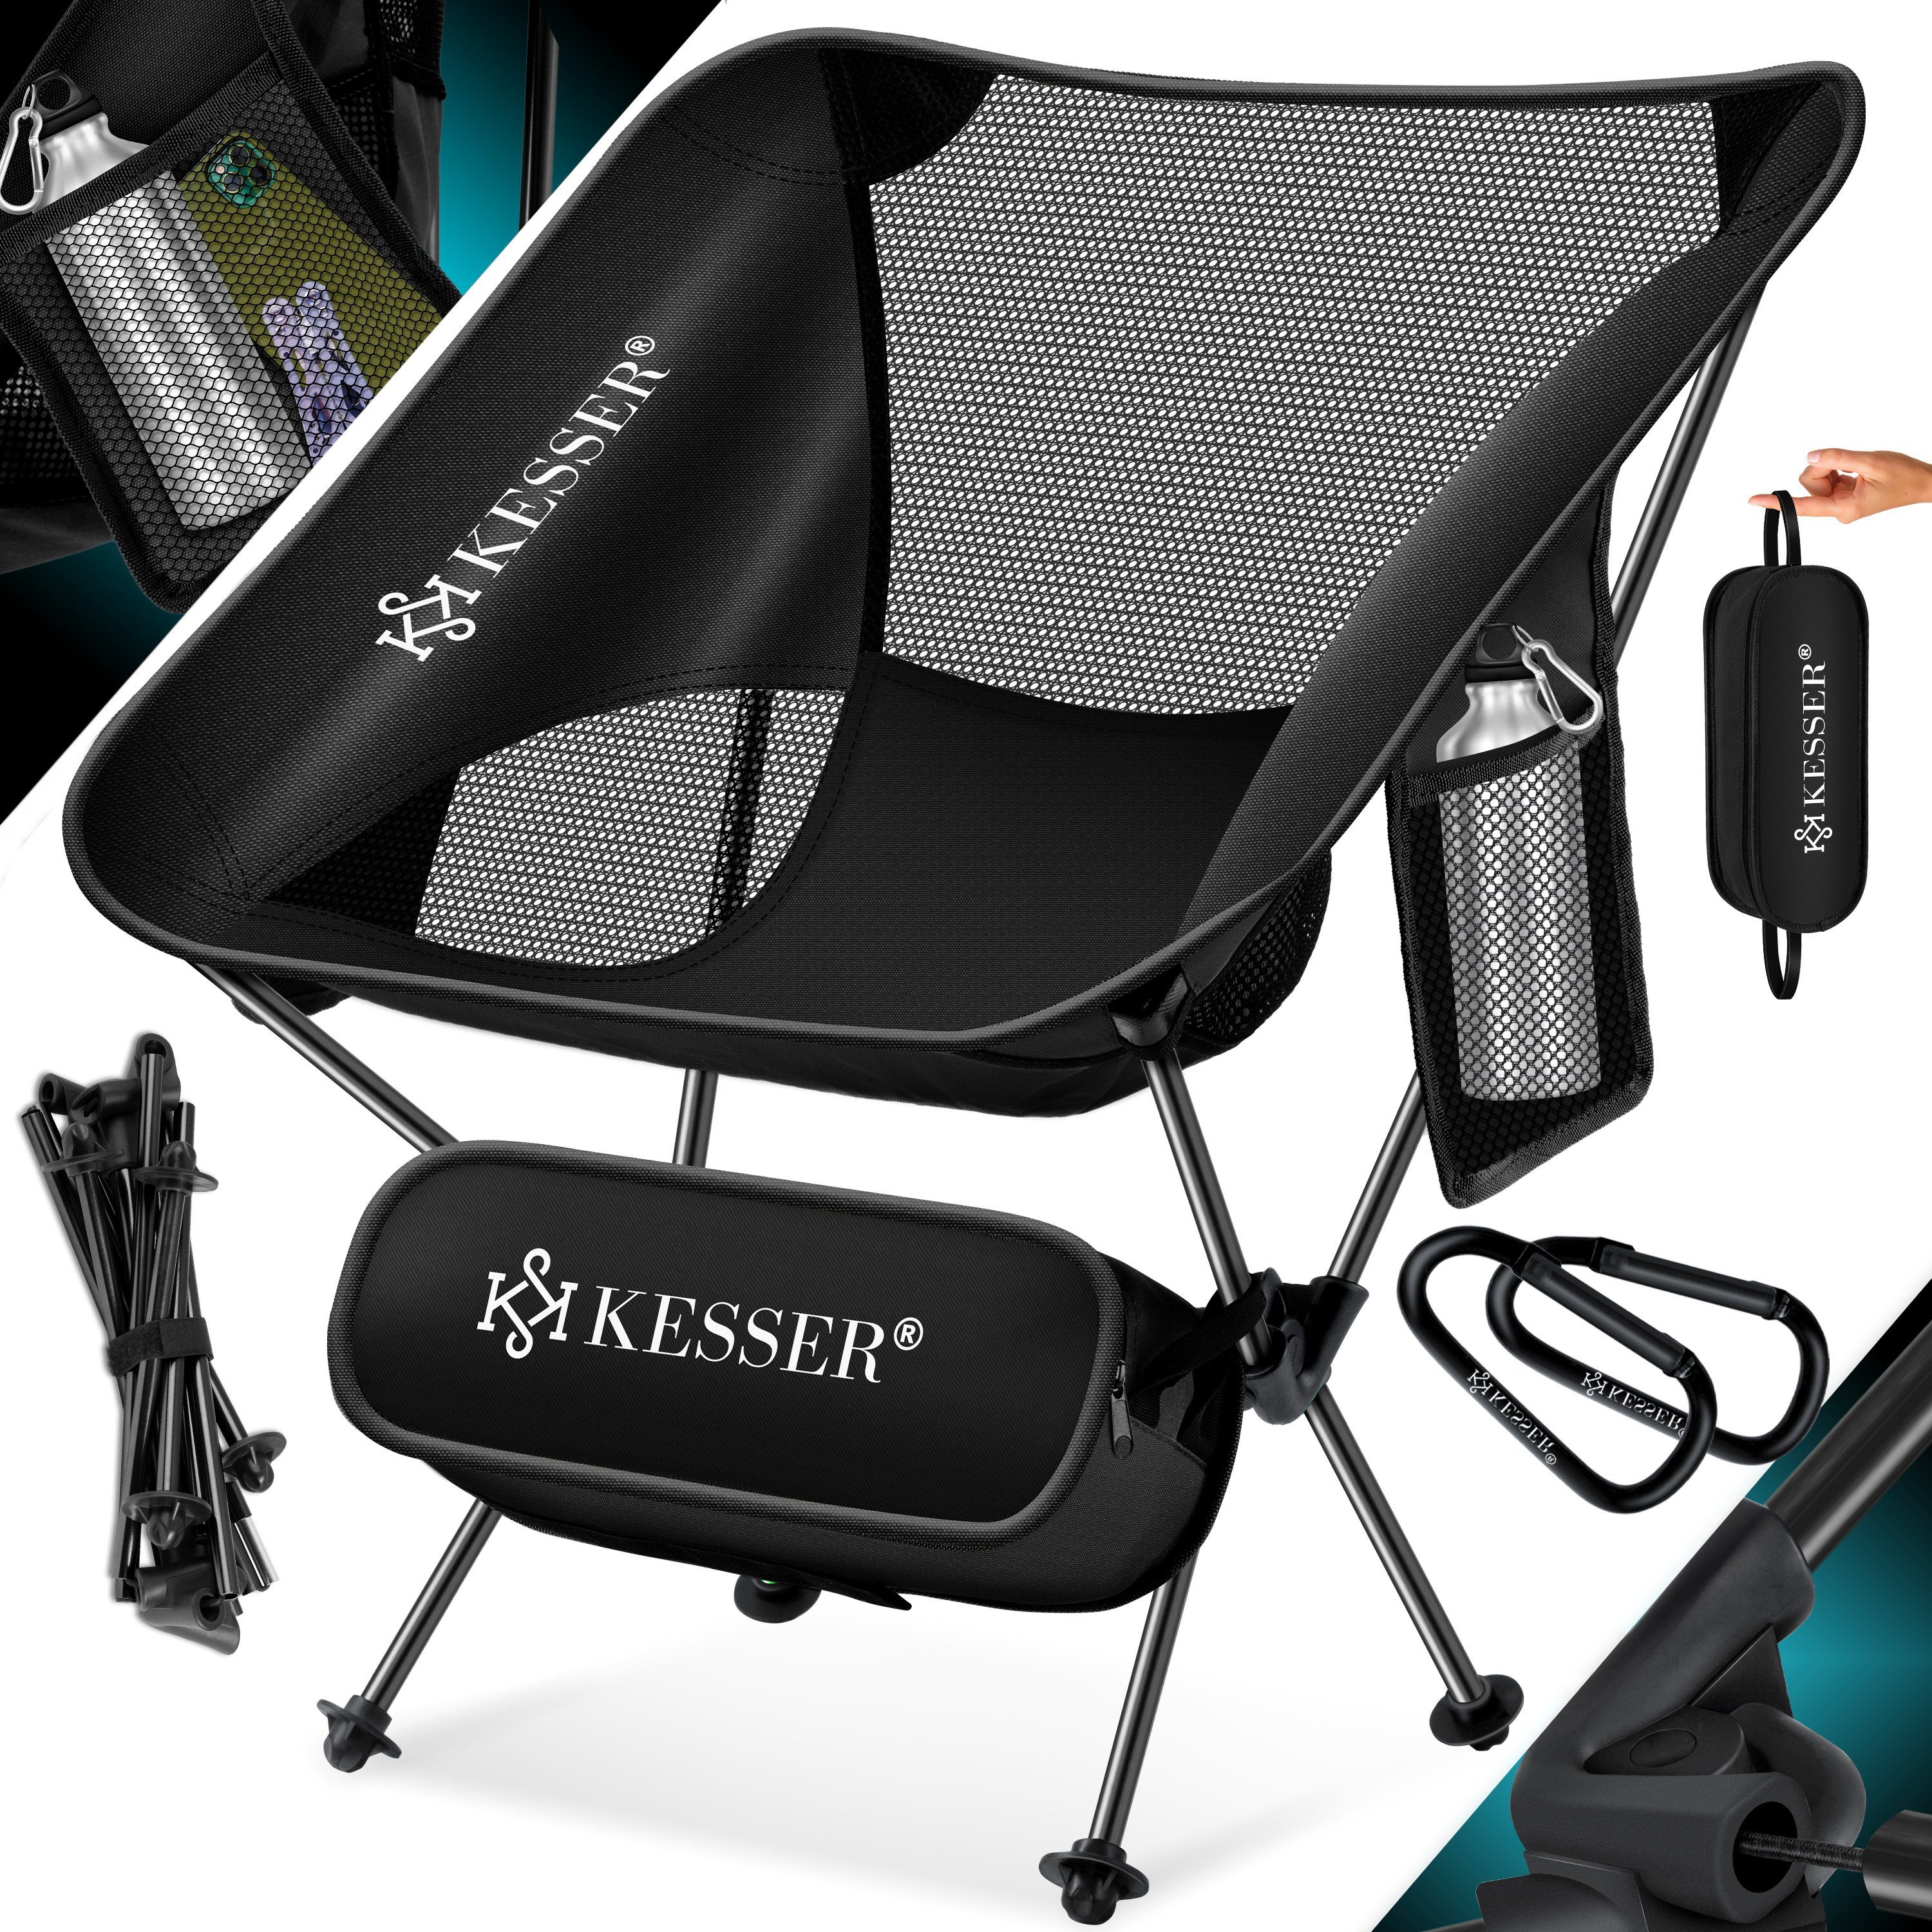 KESSER Campingstuhl, Campingstuhl faltbar klappbar tragbar Angel Camping Stuhl schwarz